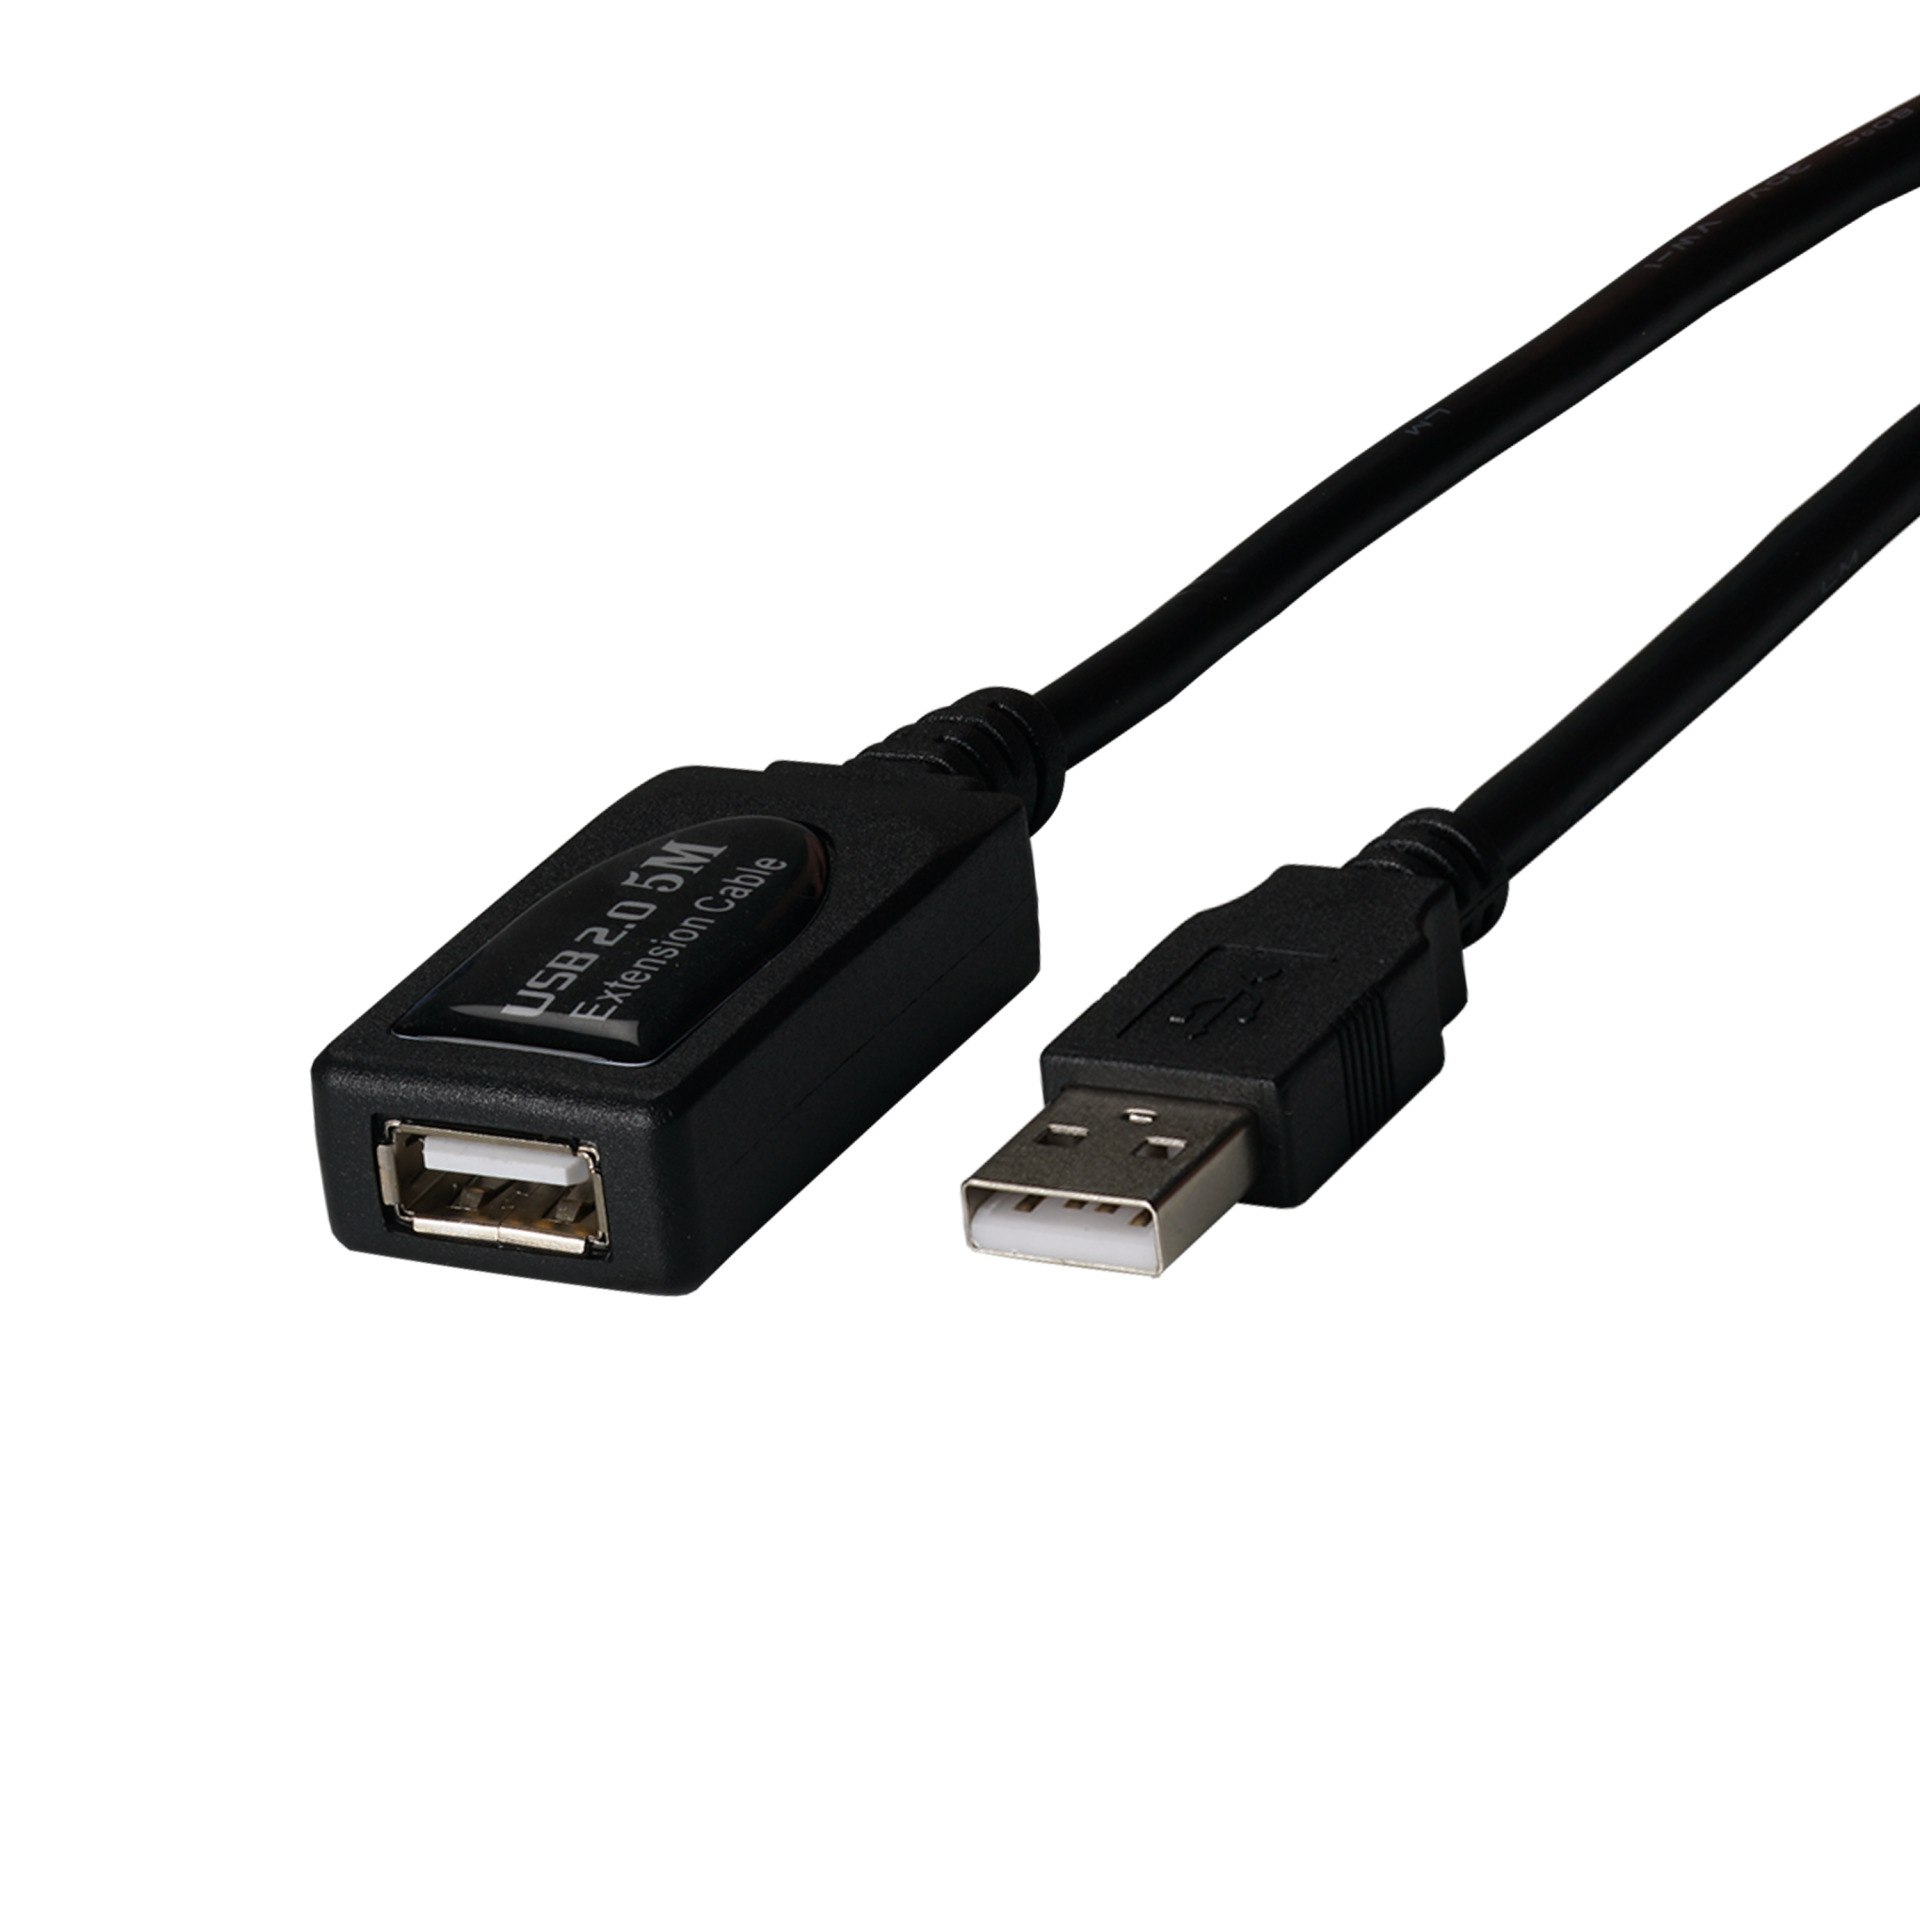 USB2.0 Repeater Kabel 5m aktiv,USB-A Buchse auf USB-A Stecker